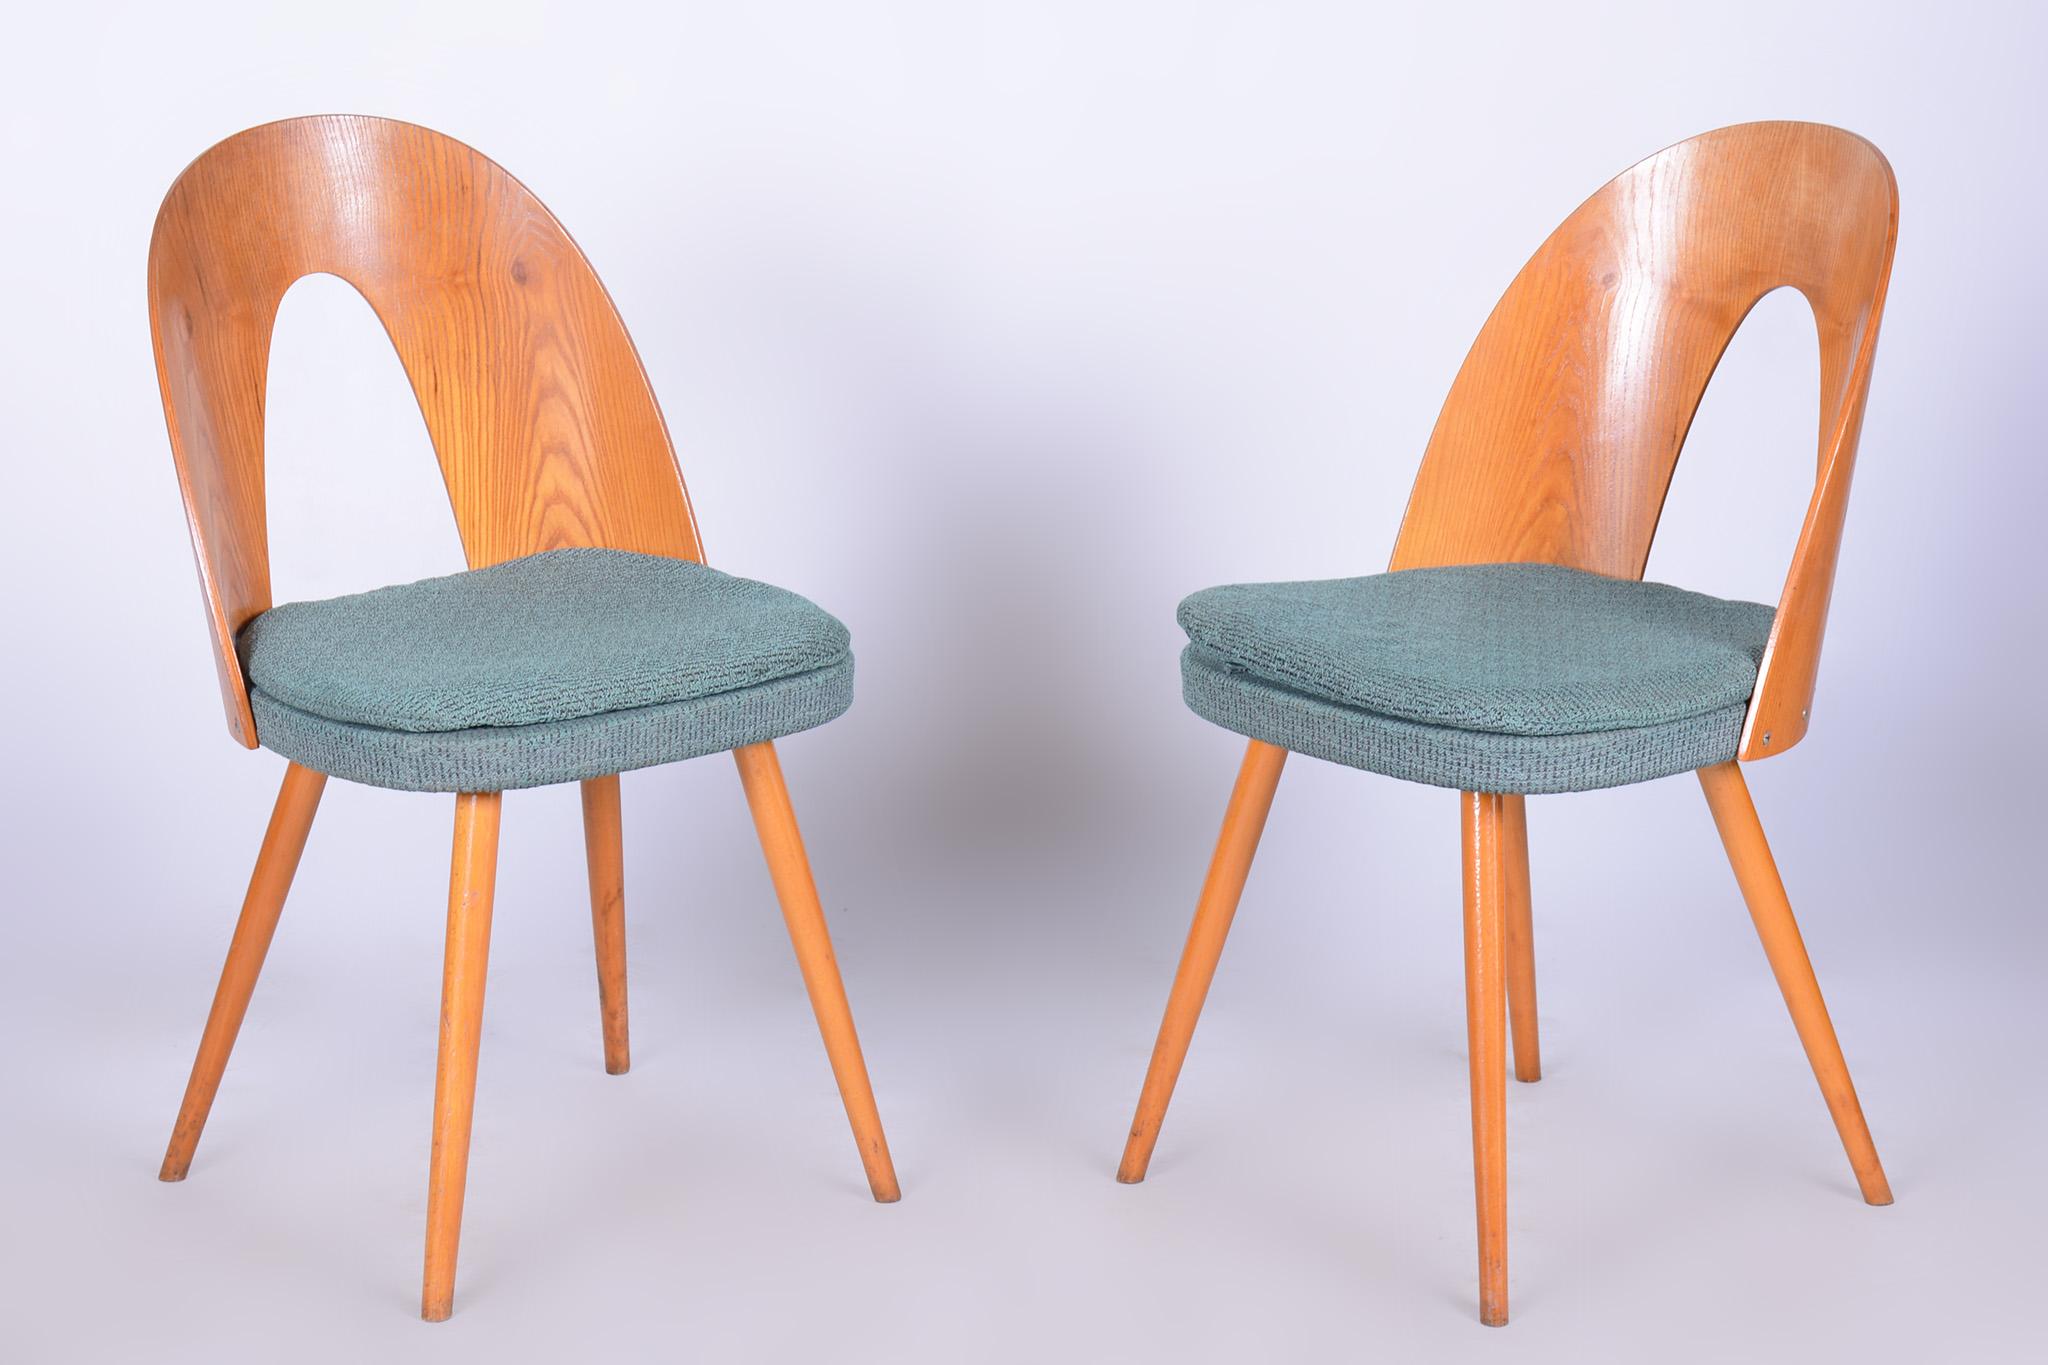 Fabric Four Original Midcentury Chairs, Ash, Antonin Suman, Czechia, 1930s